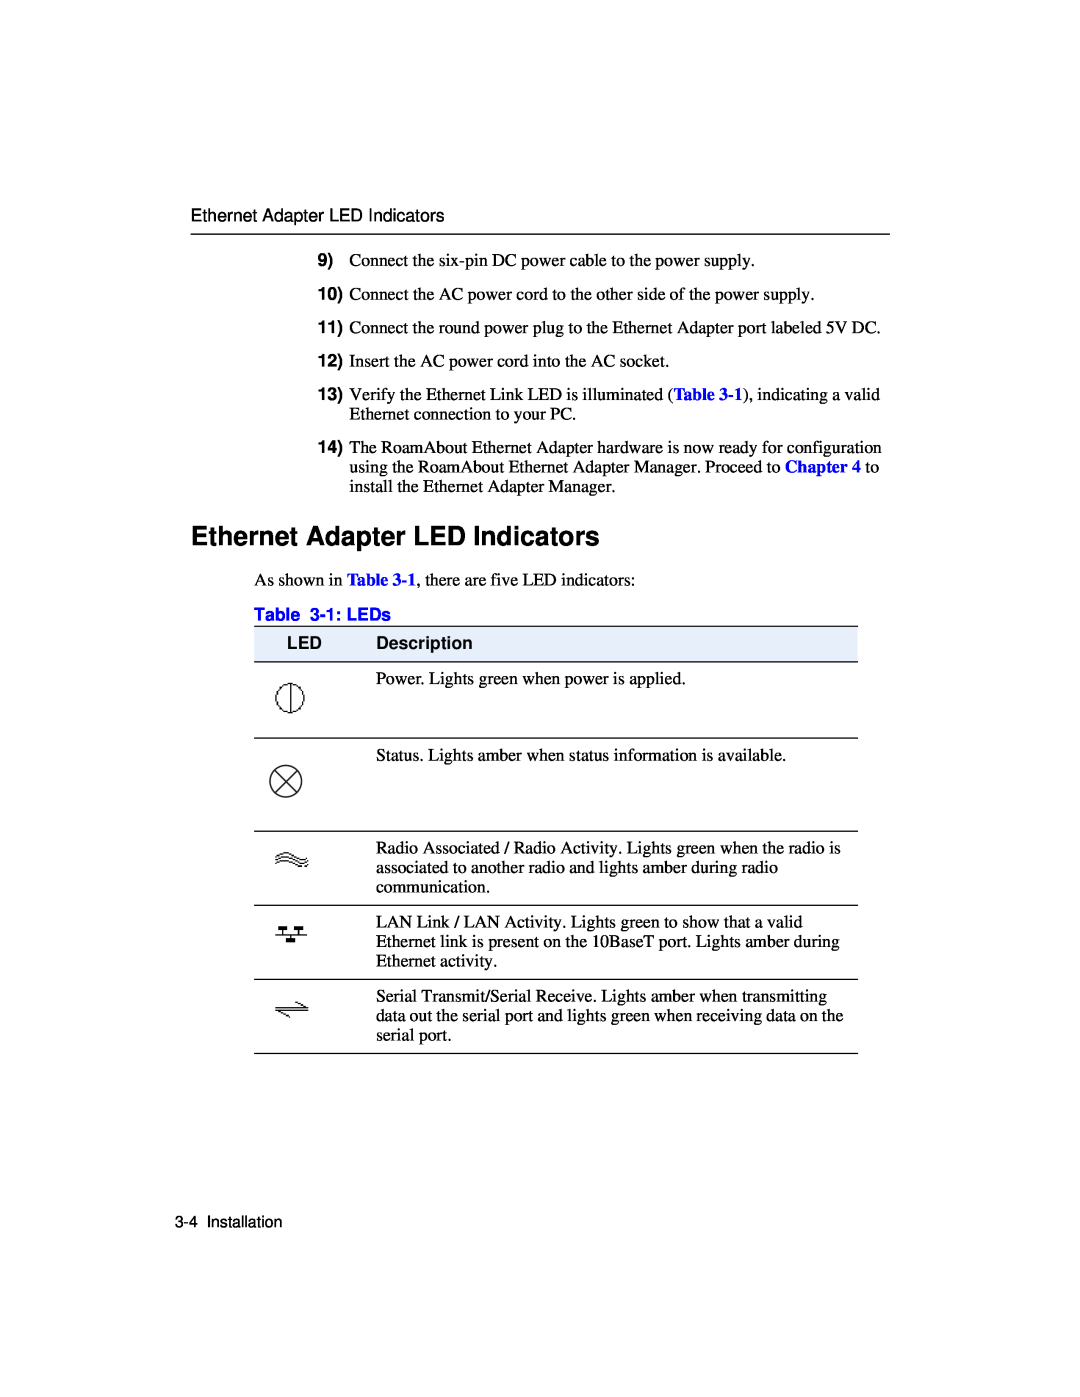 Enterasys Networks Wireless Ethernet Adapter I manual Ethernet Adapter LED Indicators, 1 LEDs, LED Description 